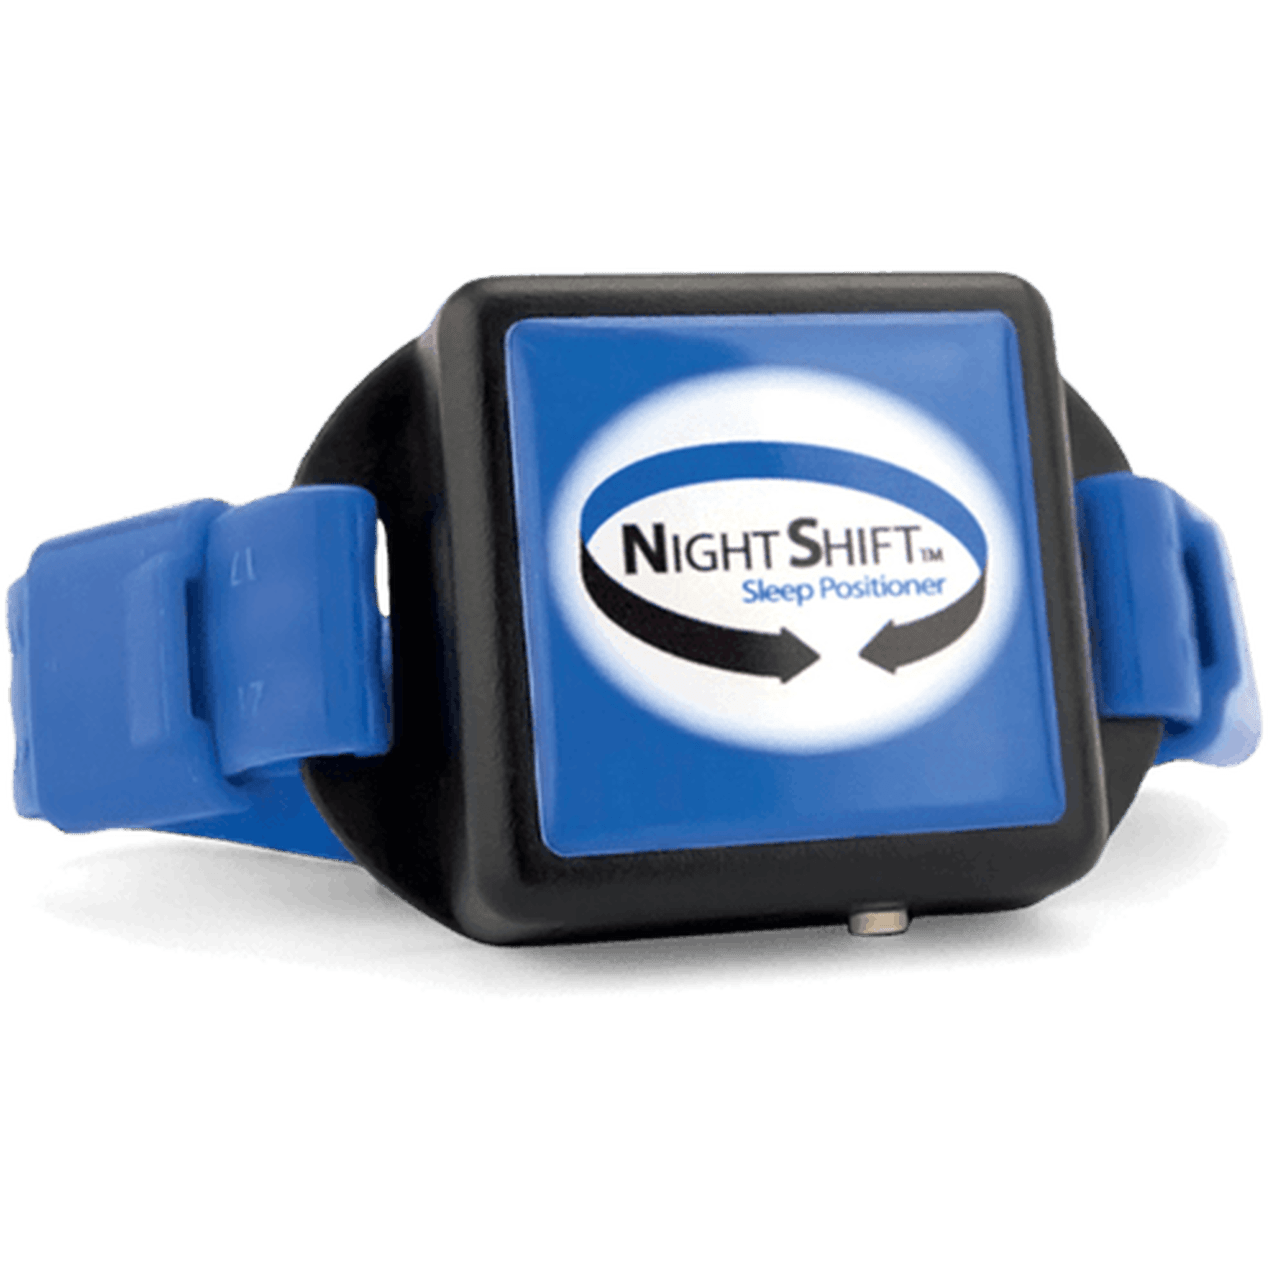 Nightshift sleep positioner device